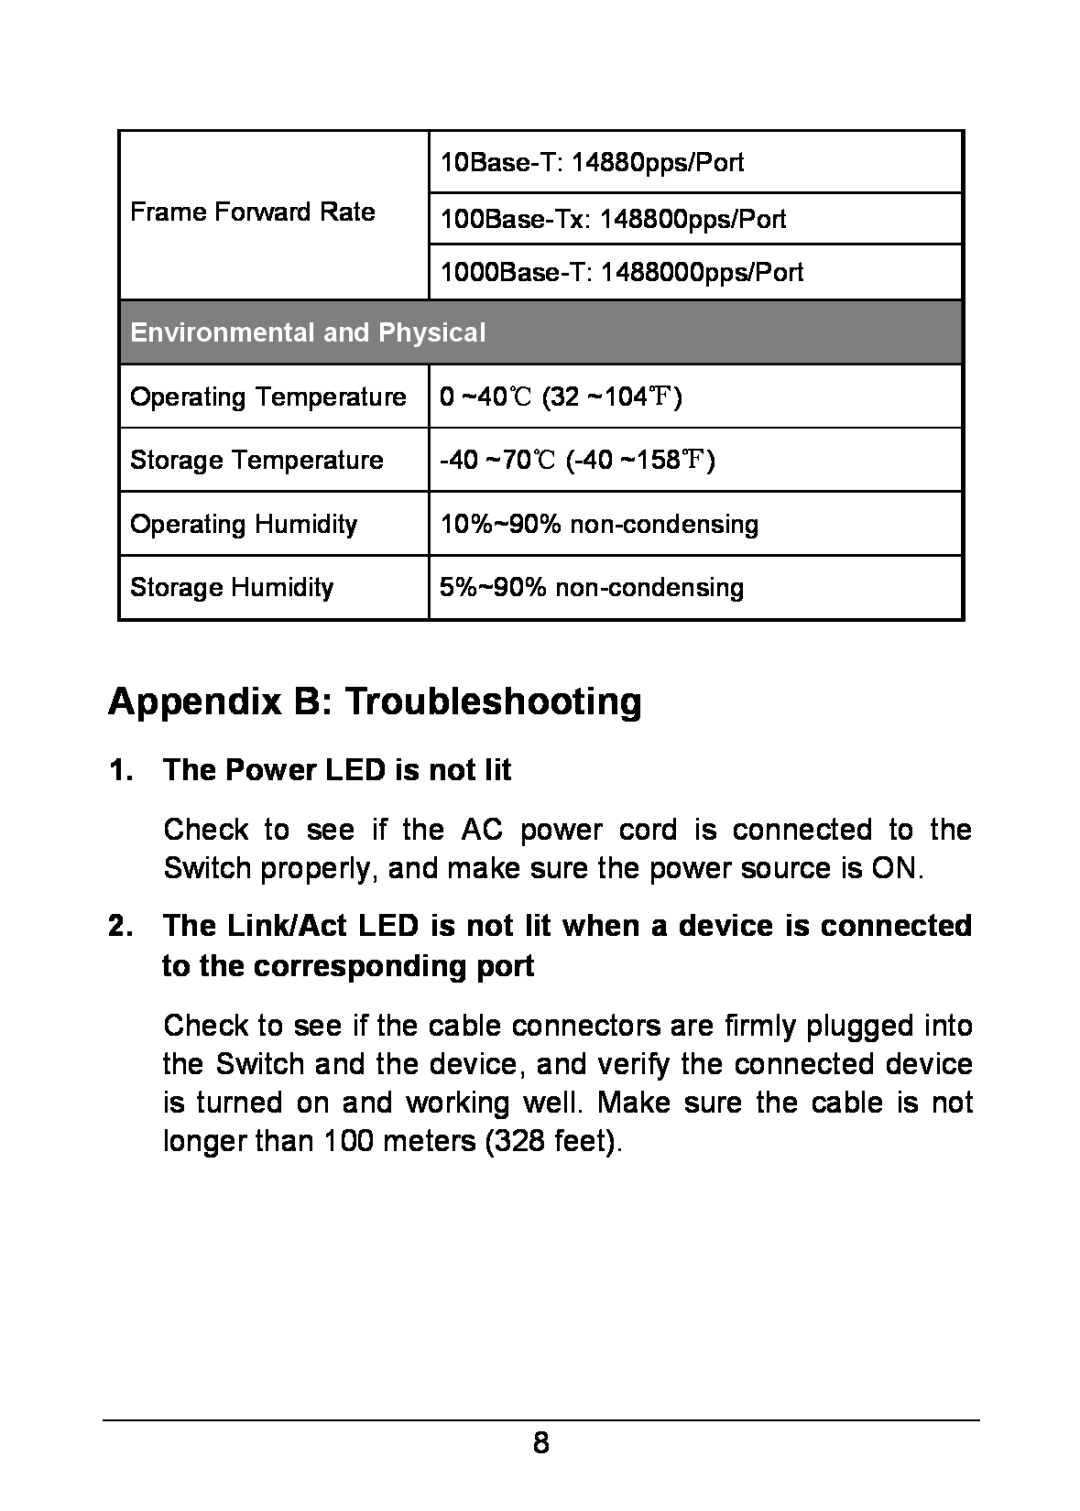 TP-Link TL-SG1005D, TL-SG1008D manual Appendix B Troubleshooting, The Power LED is not lit 